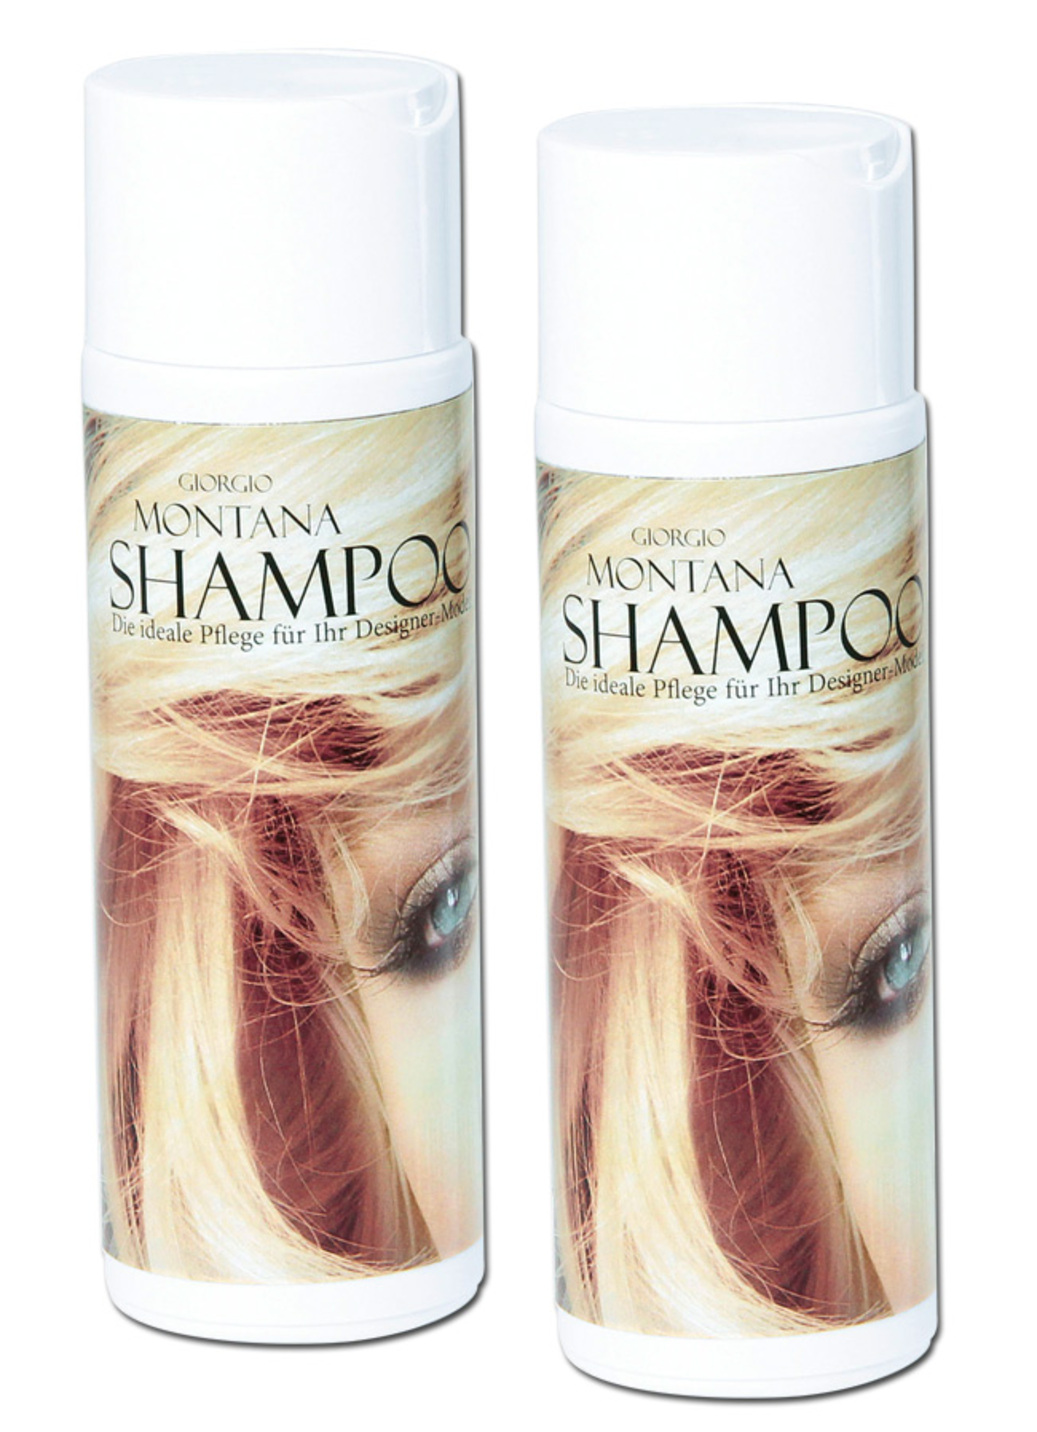 Haarstyling - Pruikenshampoo en crèmespoeling, verschillende versies, in Farbe NEE, in Ausführung Shampoo, set van 2 Ansicht 1